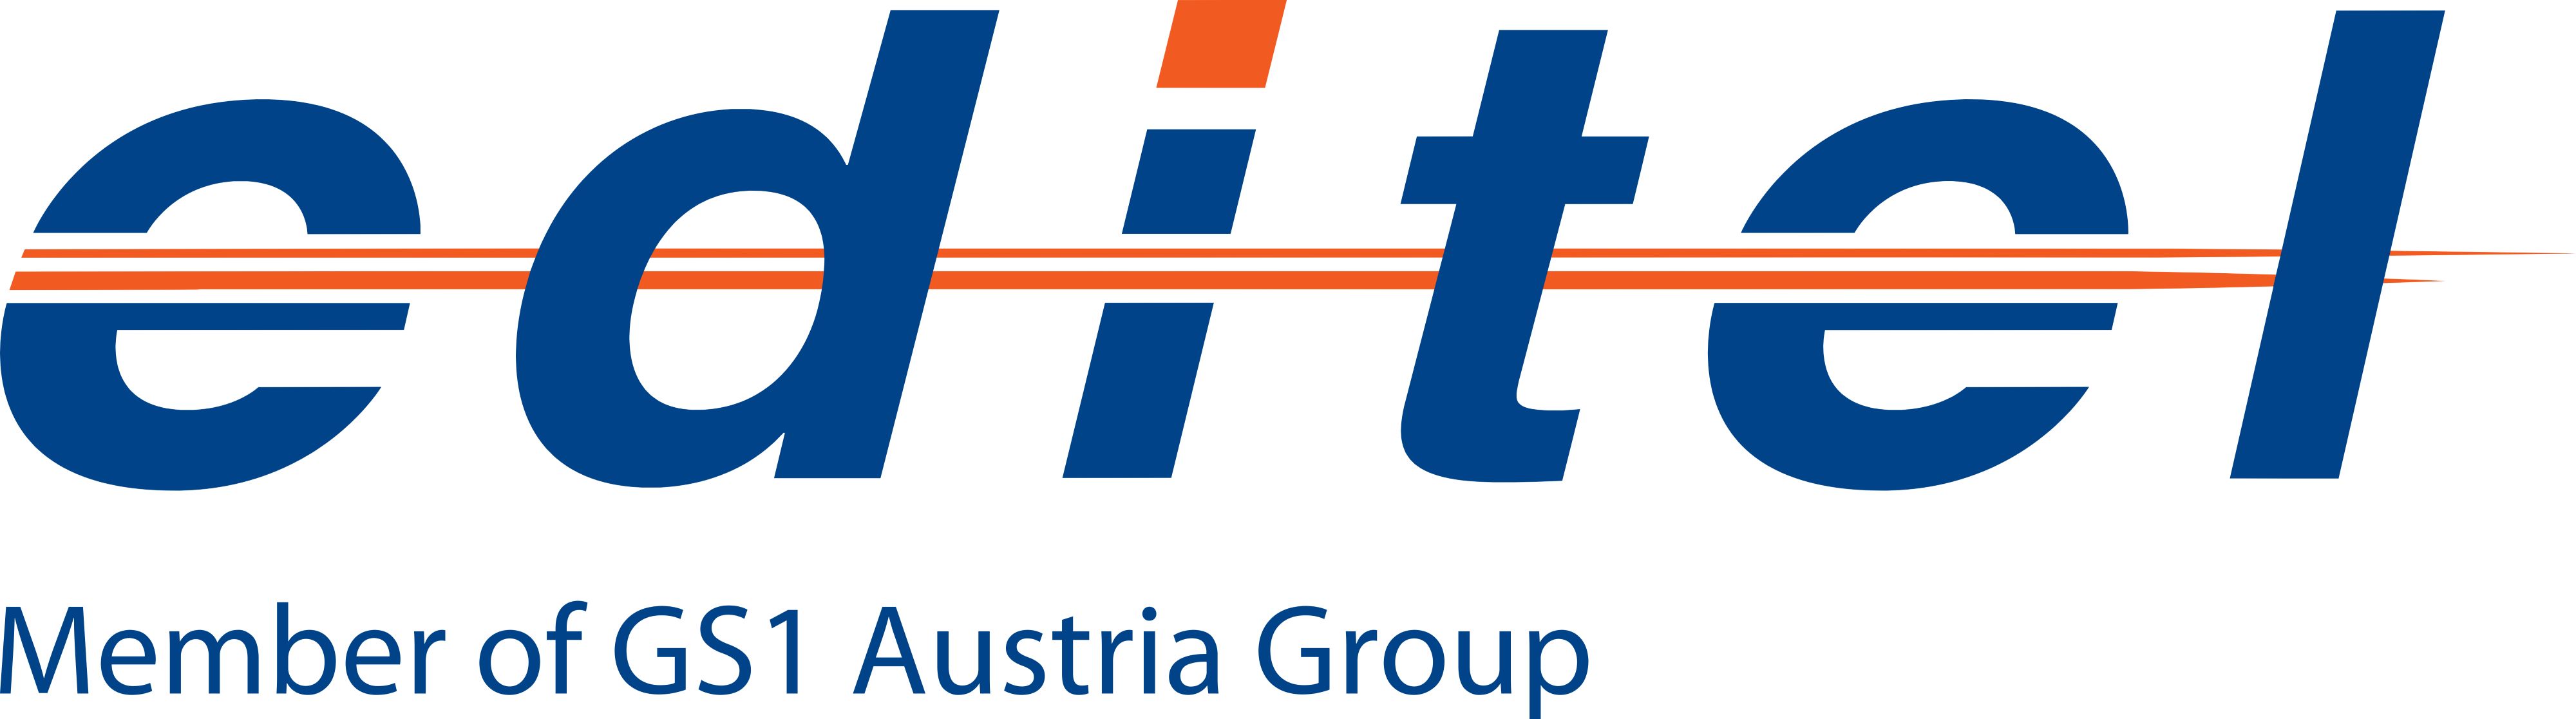 Logo EDITEL Group